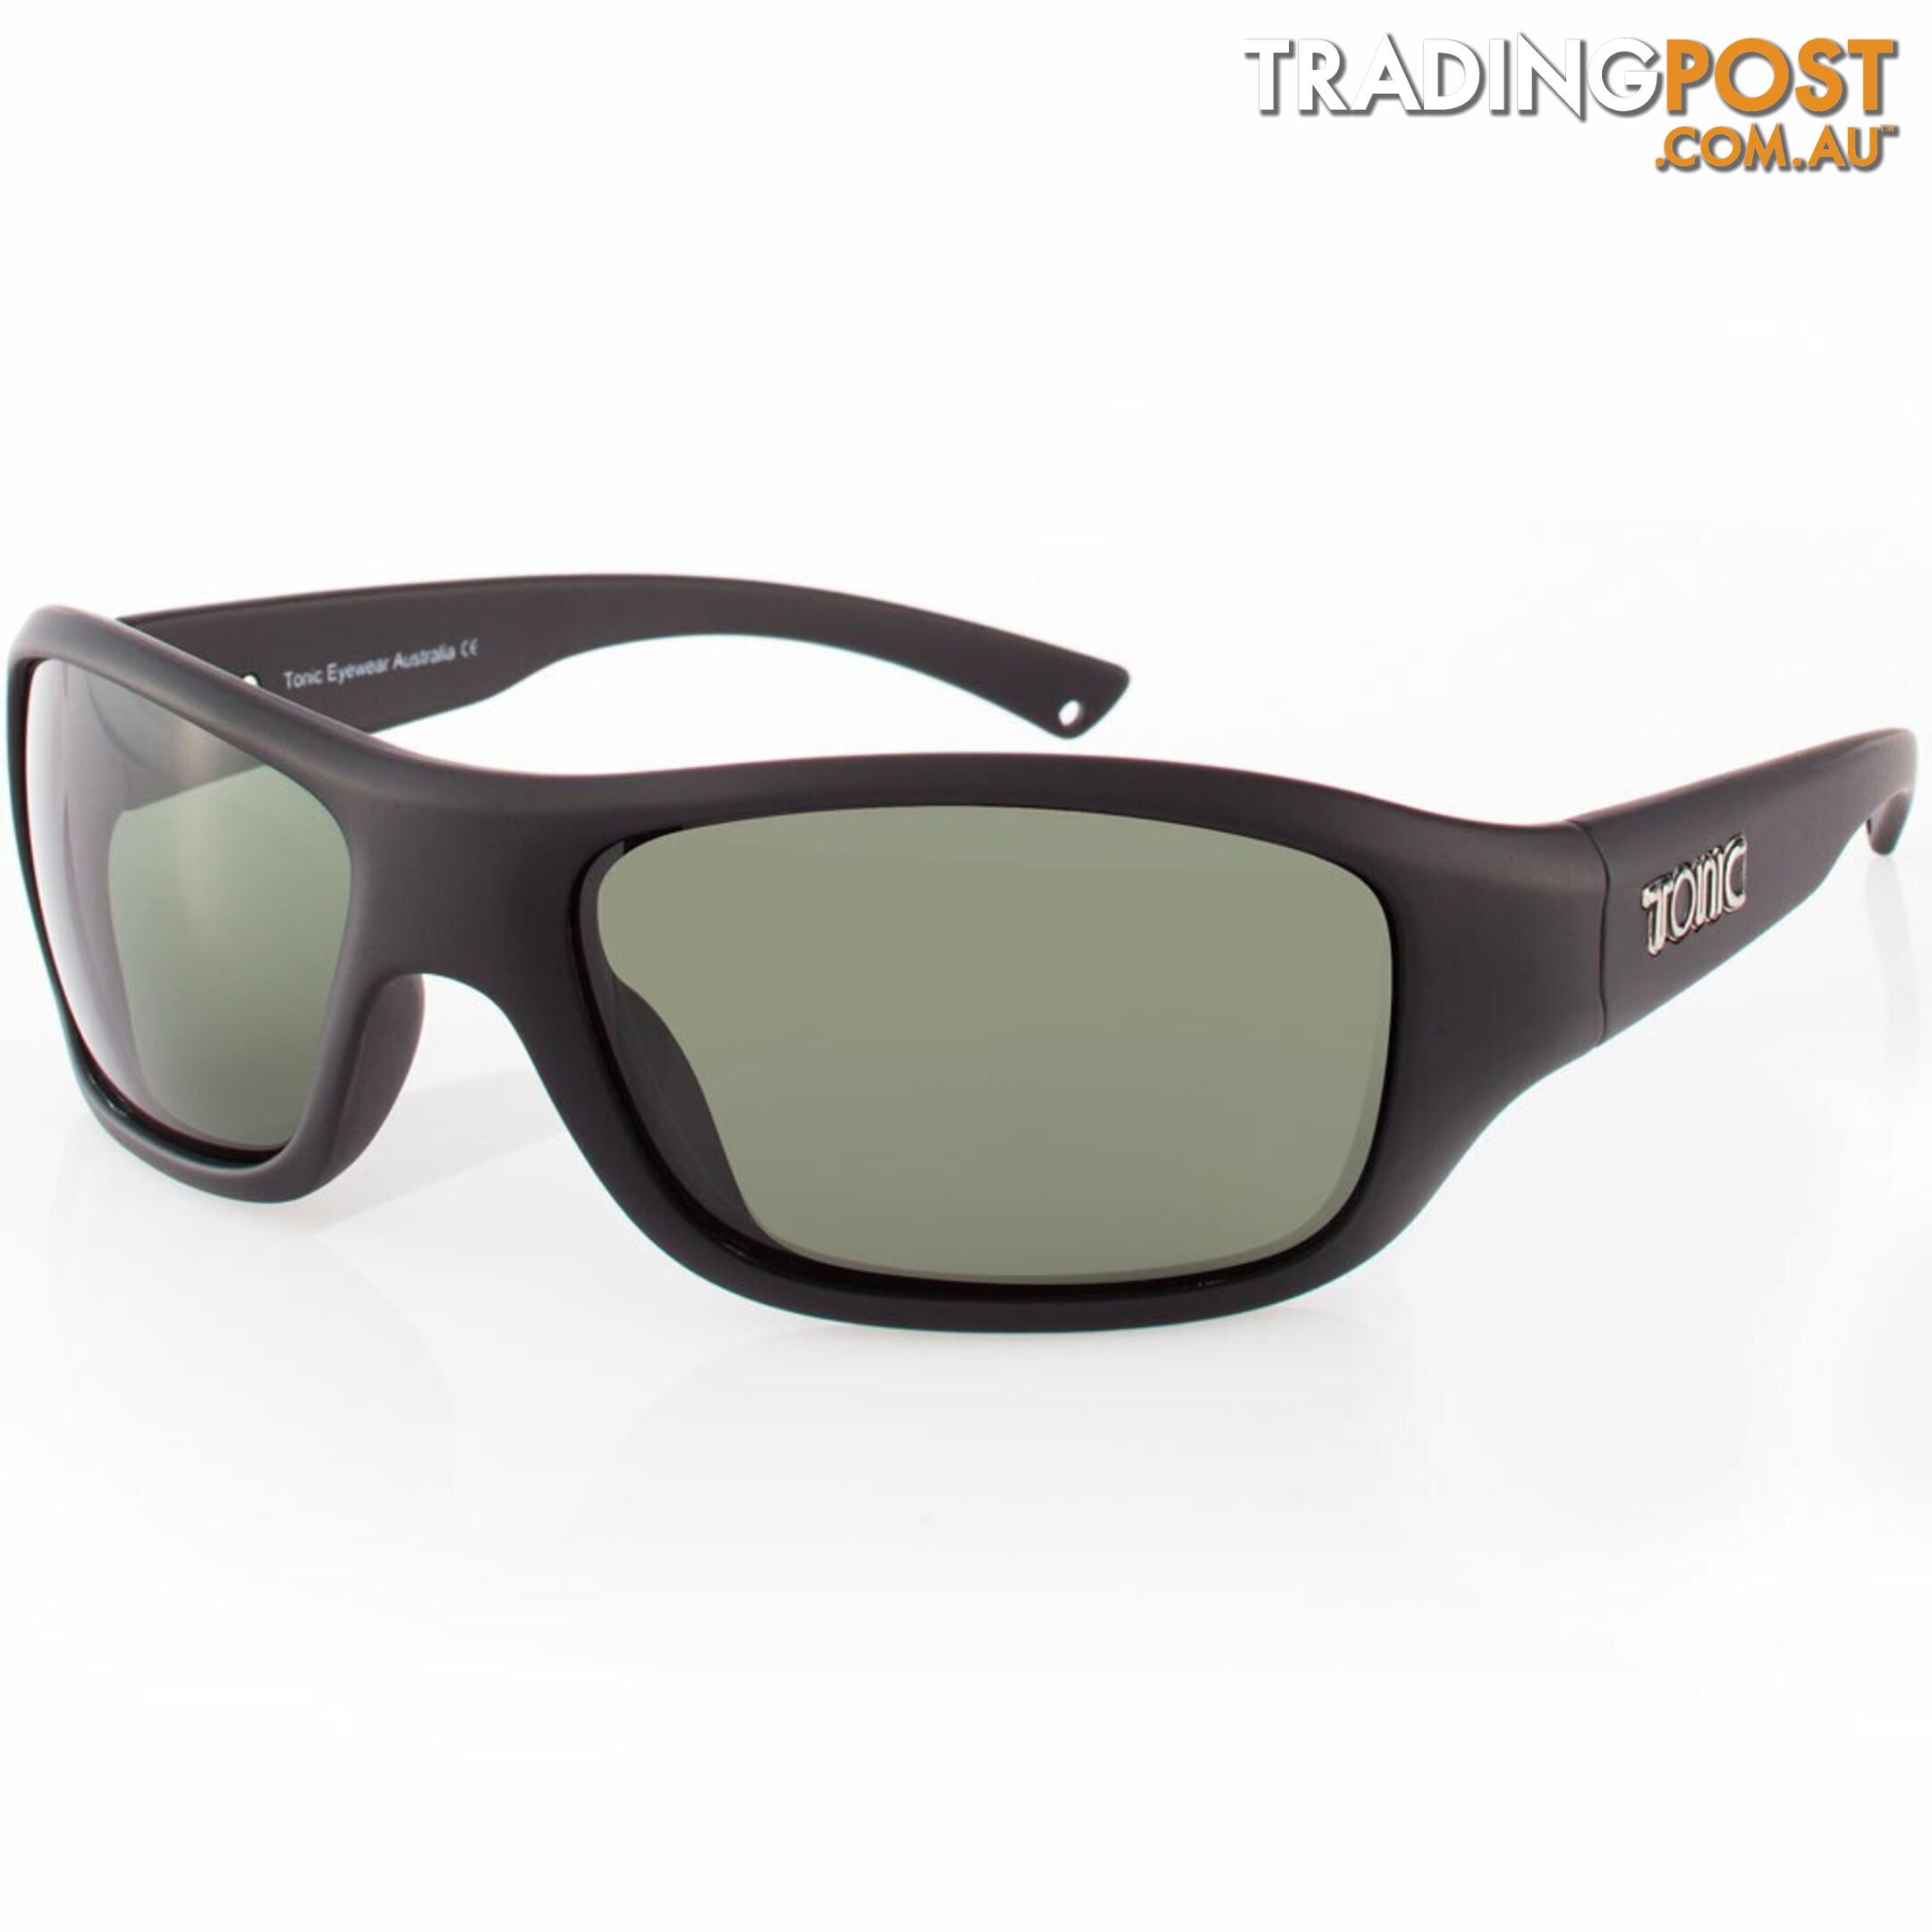 Tonic Evo Sunglasses - EMBS TPS - Tonic Eyewear Sunglasses